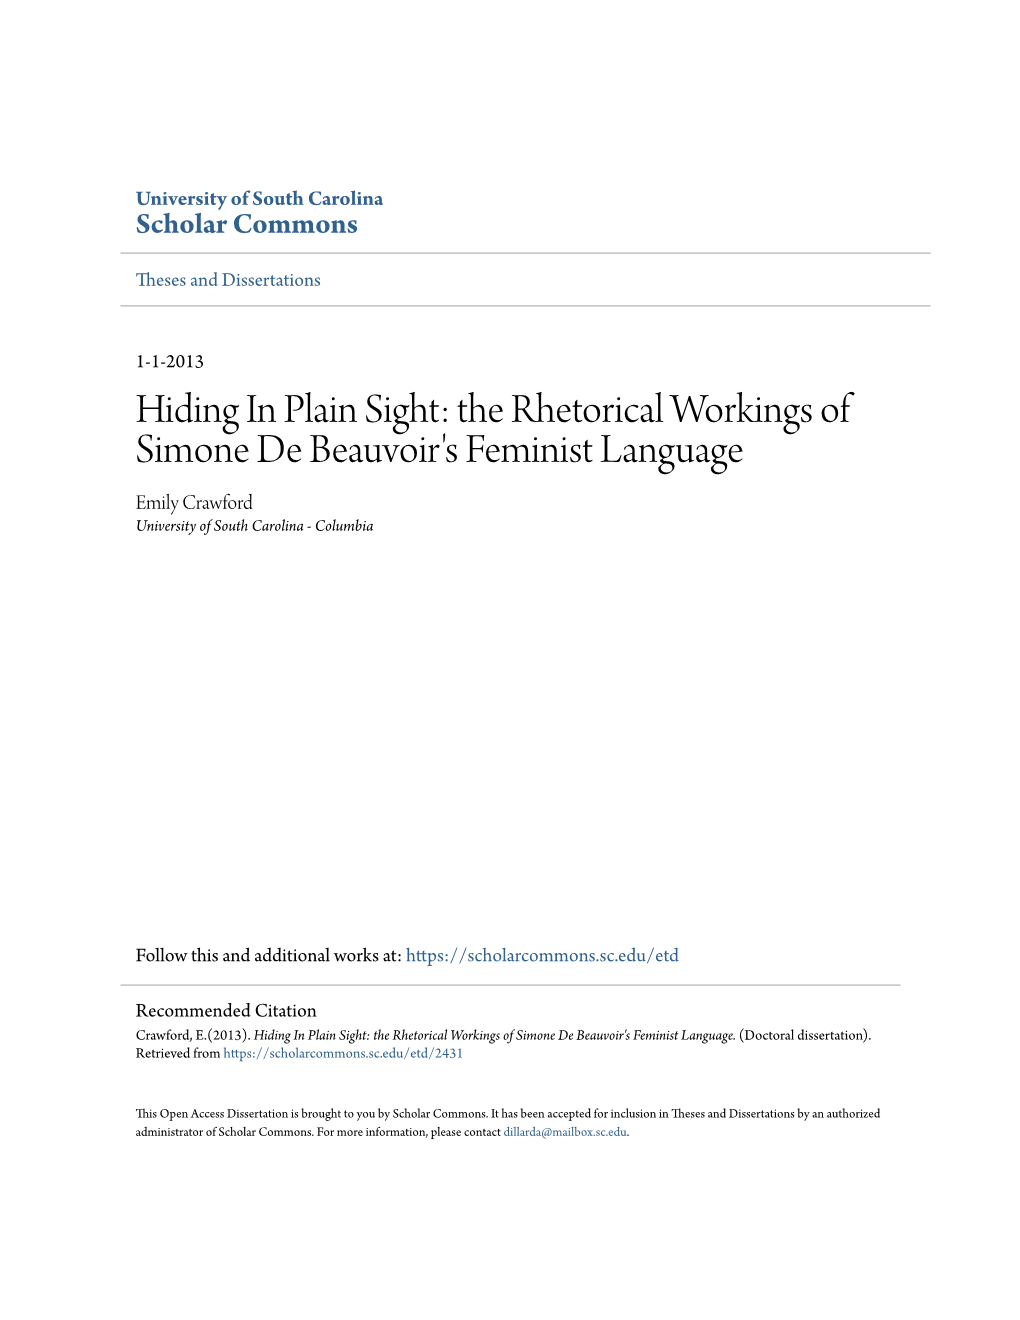 Hiding in Plain Sight: the Rhetorical Workings of Simone De Beauvoir's Feminist Language Emily Crawford University of South Carolina - Columbia